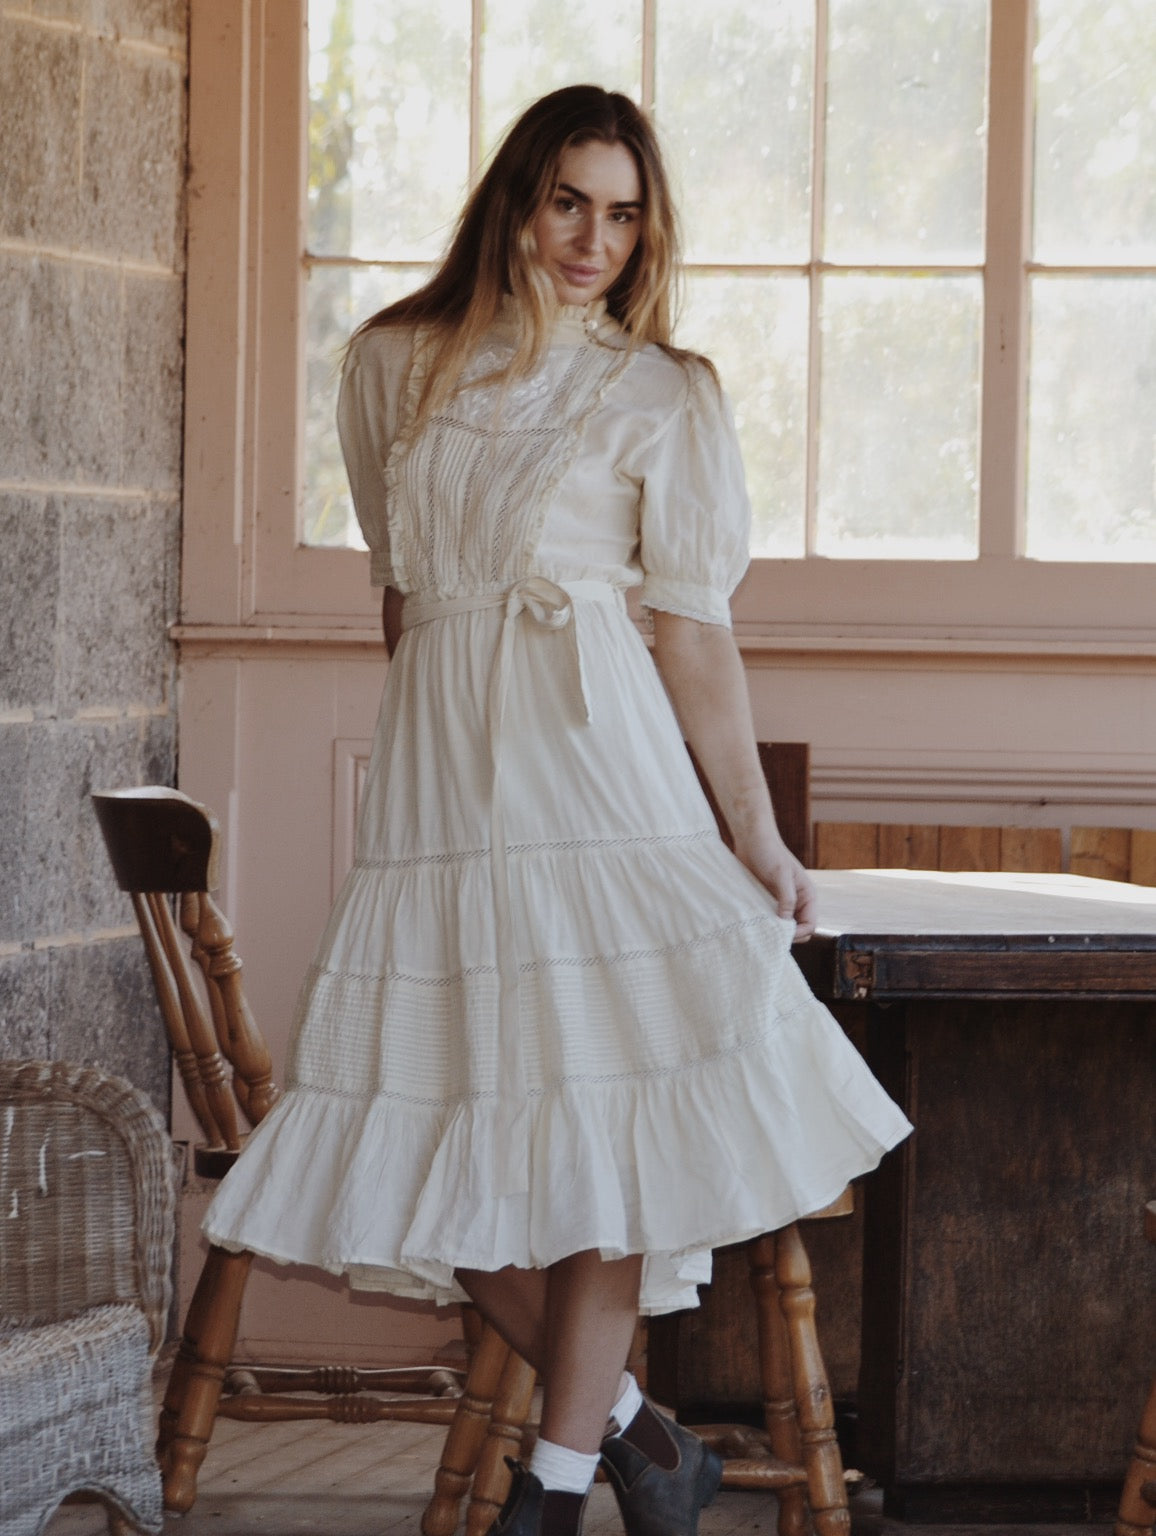 SECOND - PAULINA ANTIQUE WHITE COTTON DRESS